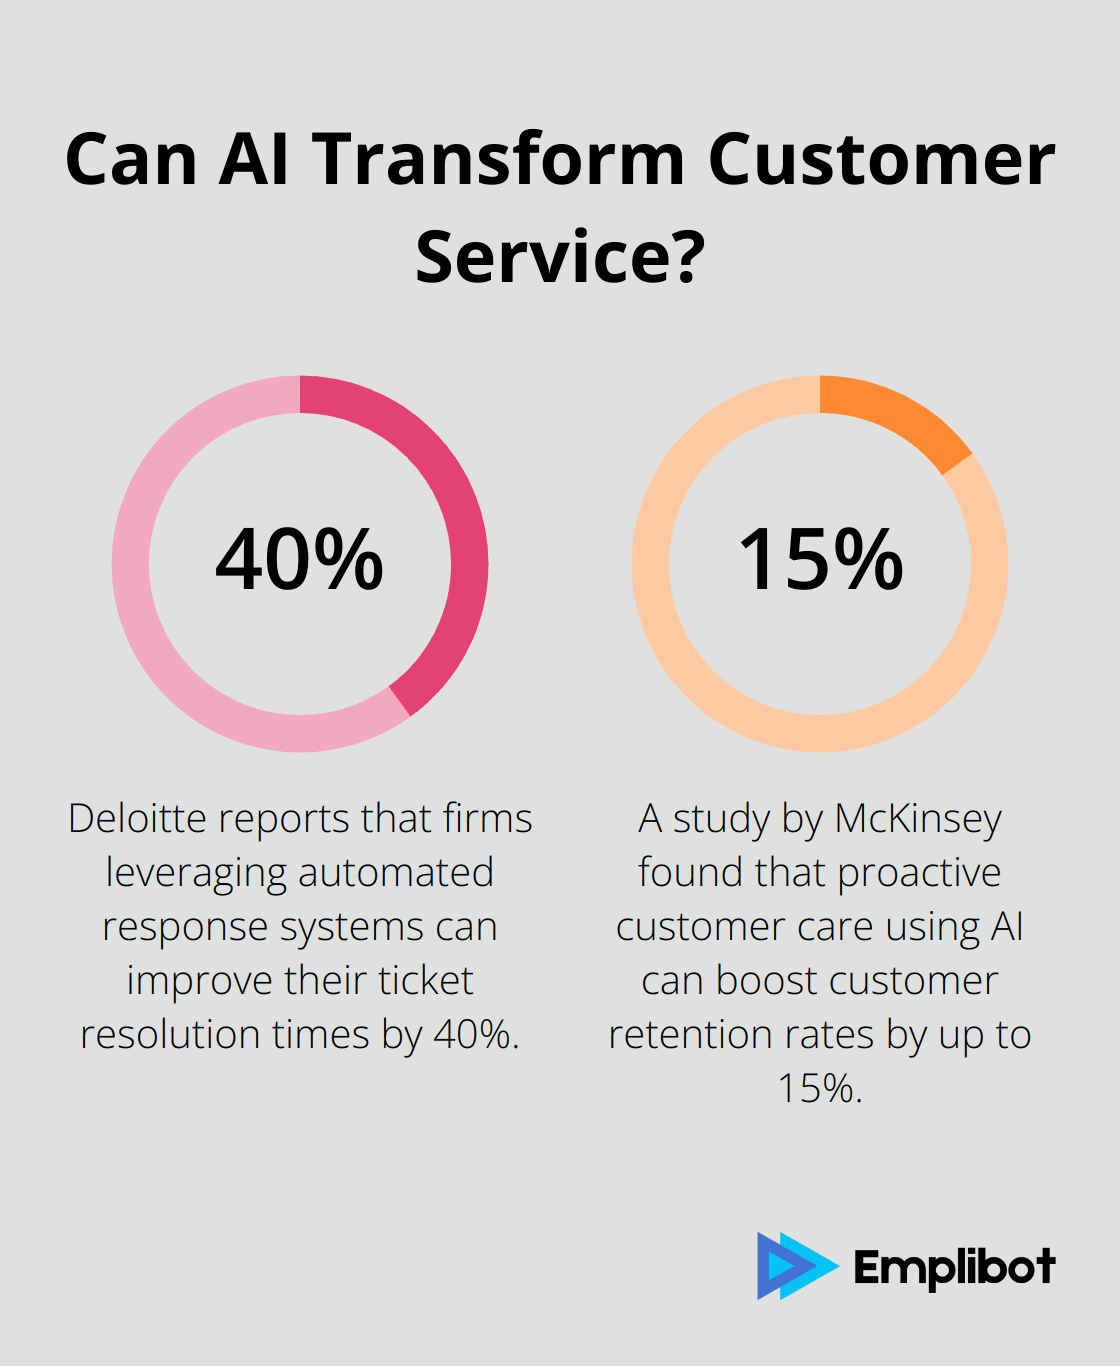 Fact - Can AI Transform Customer Service?